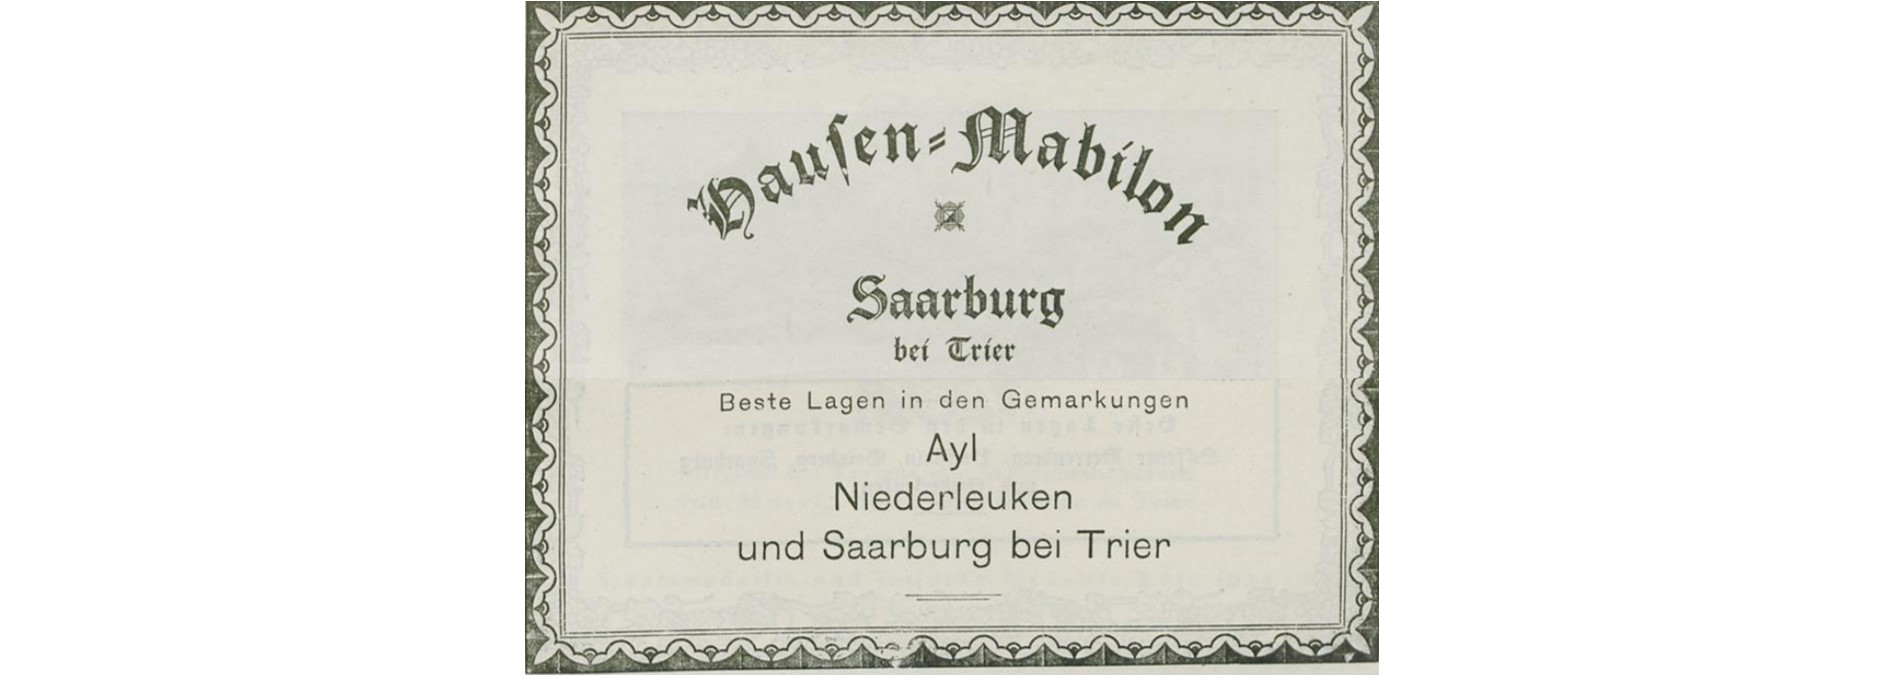 Weingut Hausen-Mabilon | Riesling Lambertskirch Spätlese 2014 Label